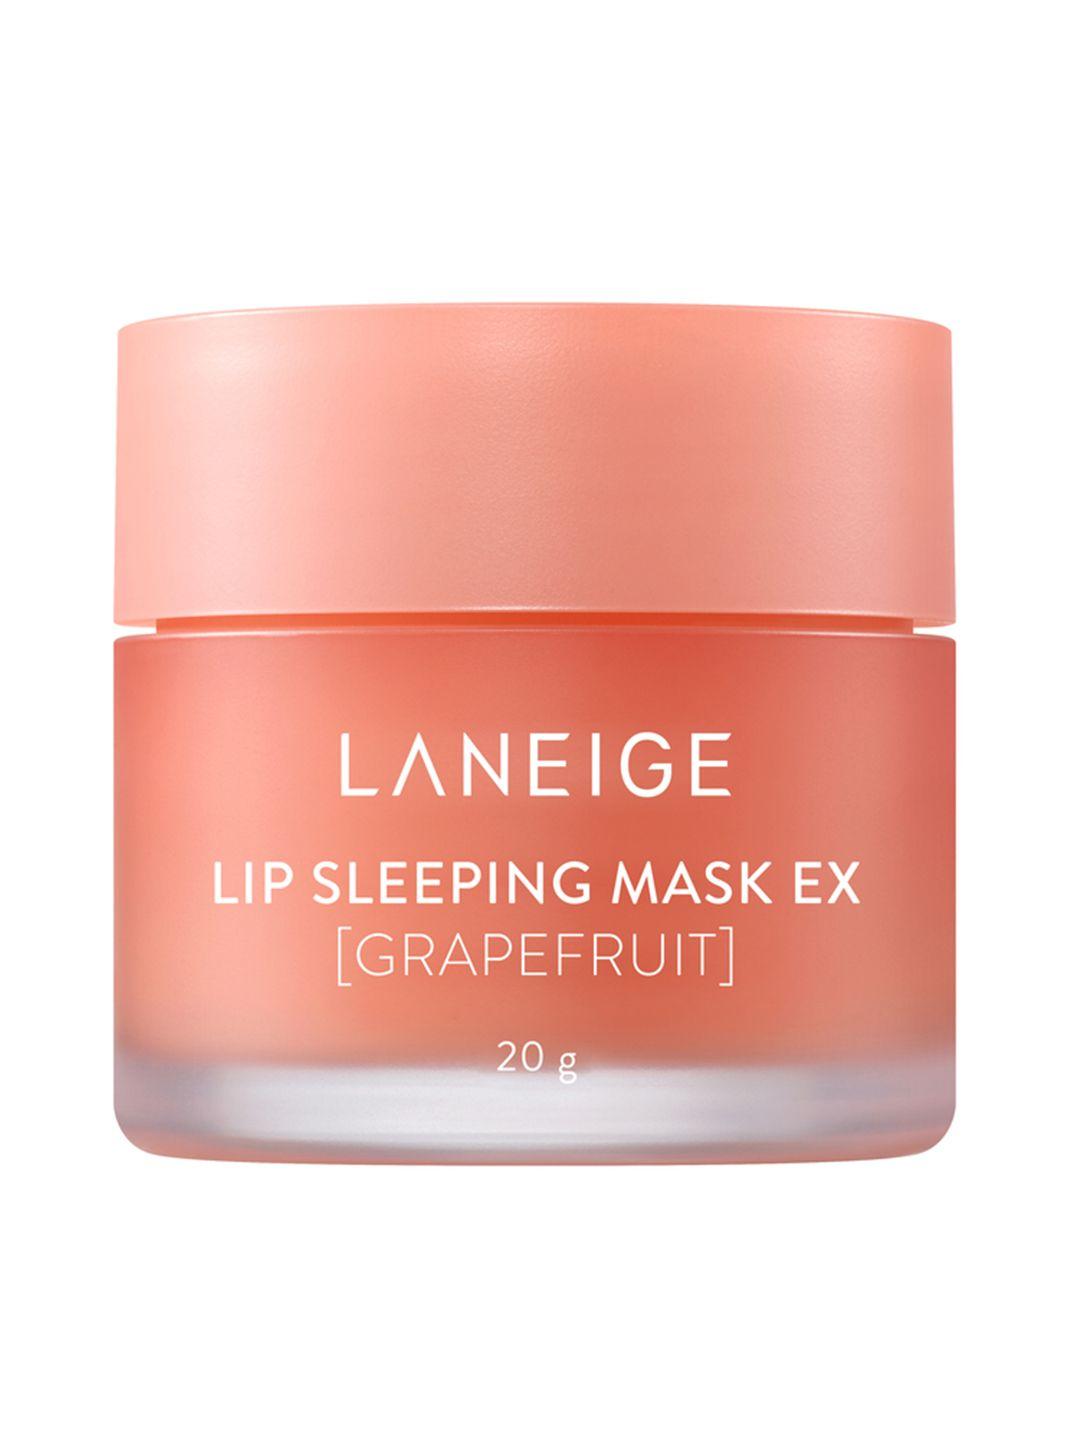 laneige dermatologist tested grapefruit lip sleeping mask ex for 8 hour hydration - 20 g